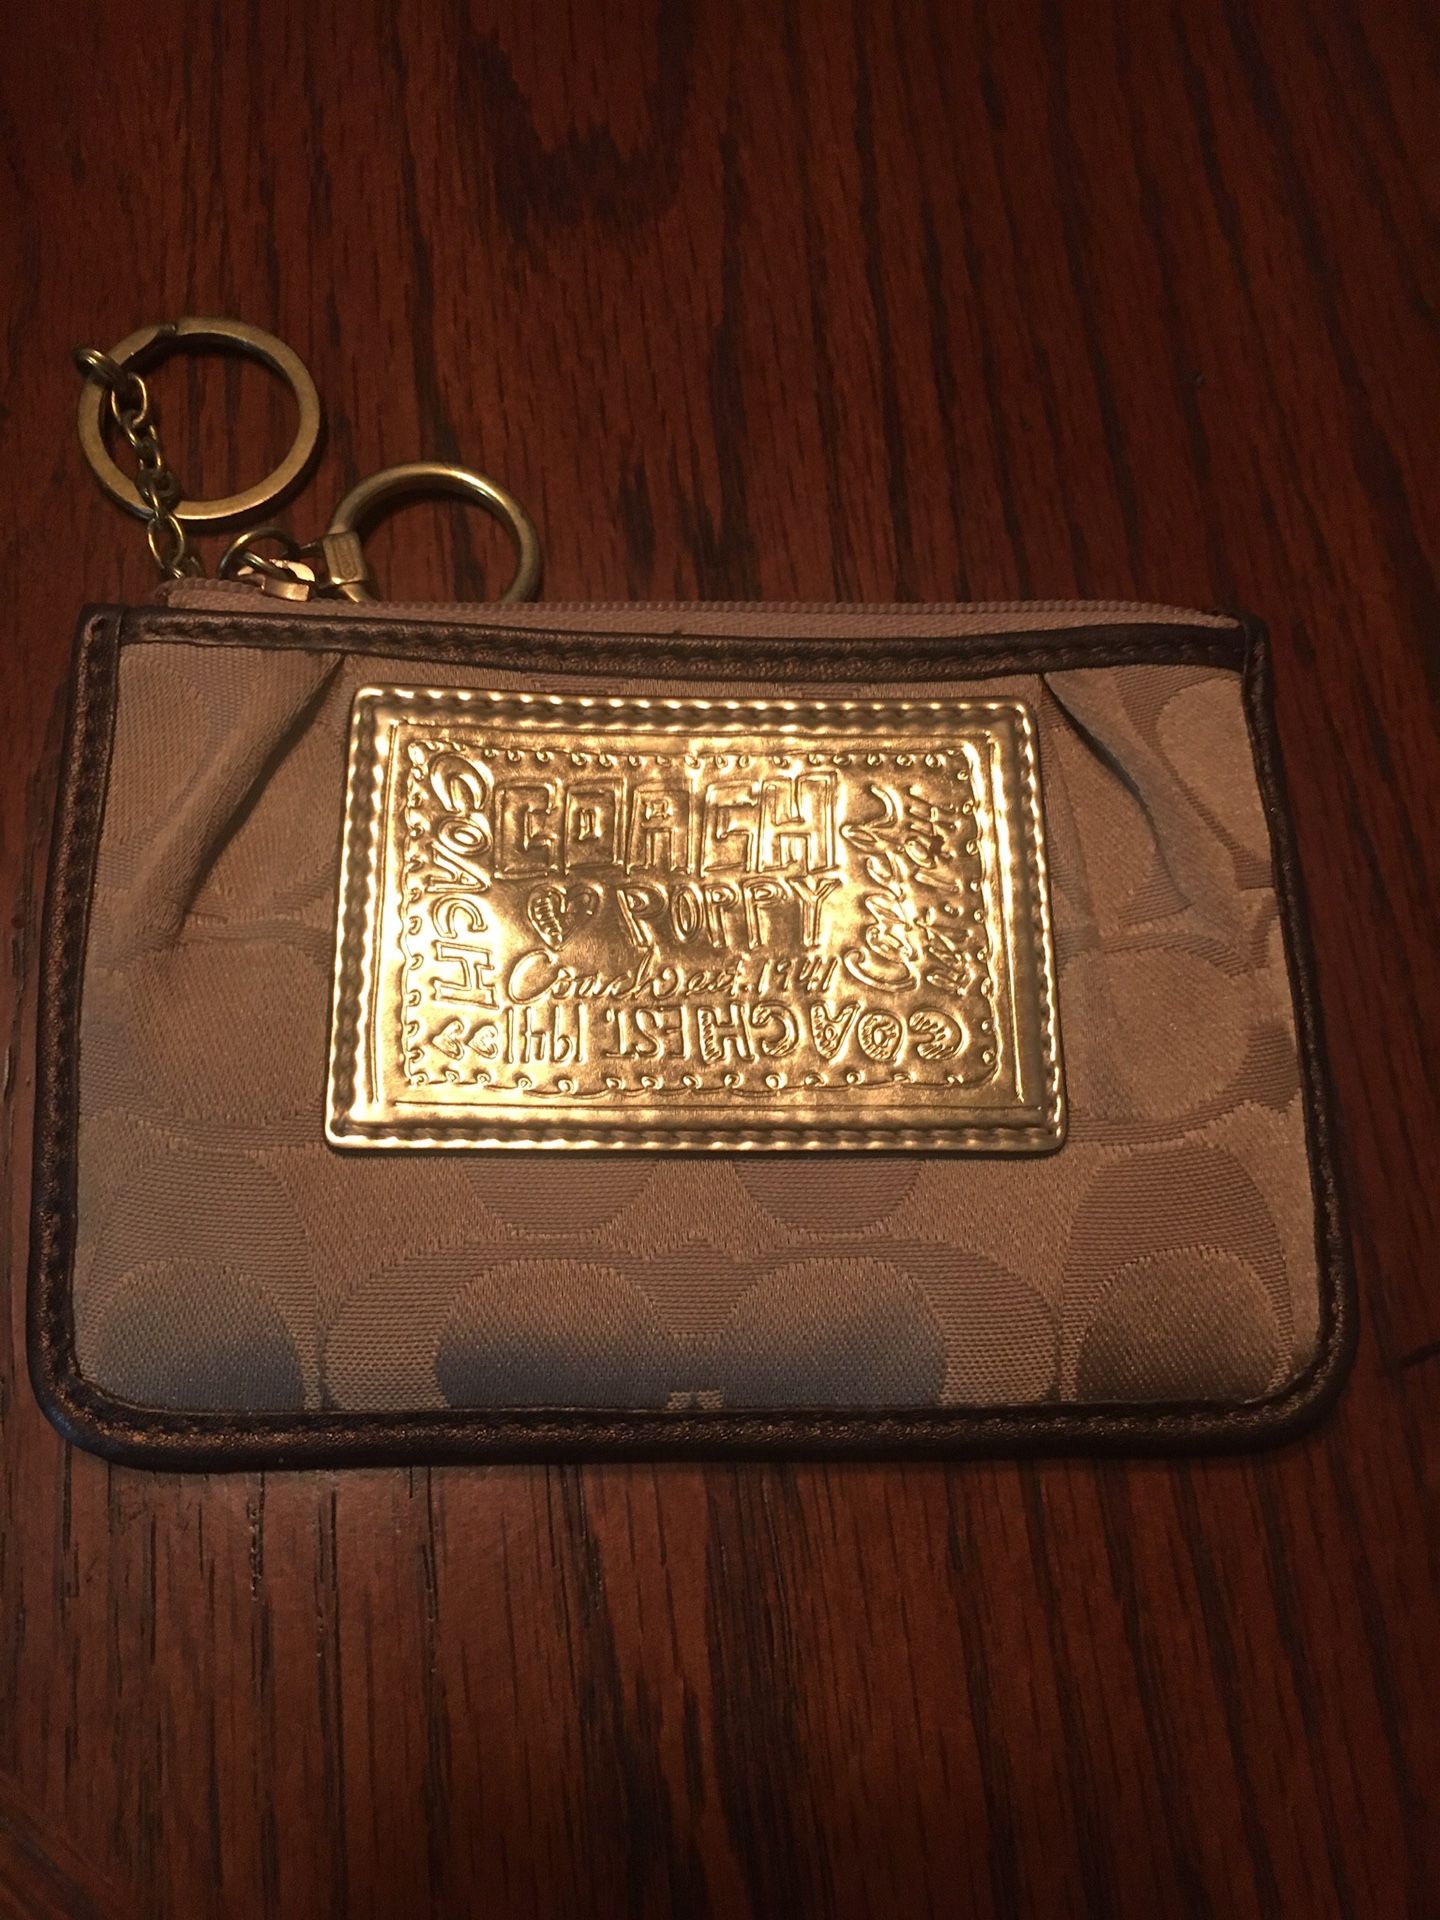 Coach coin purse